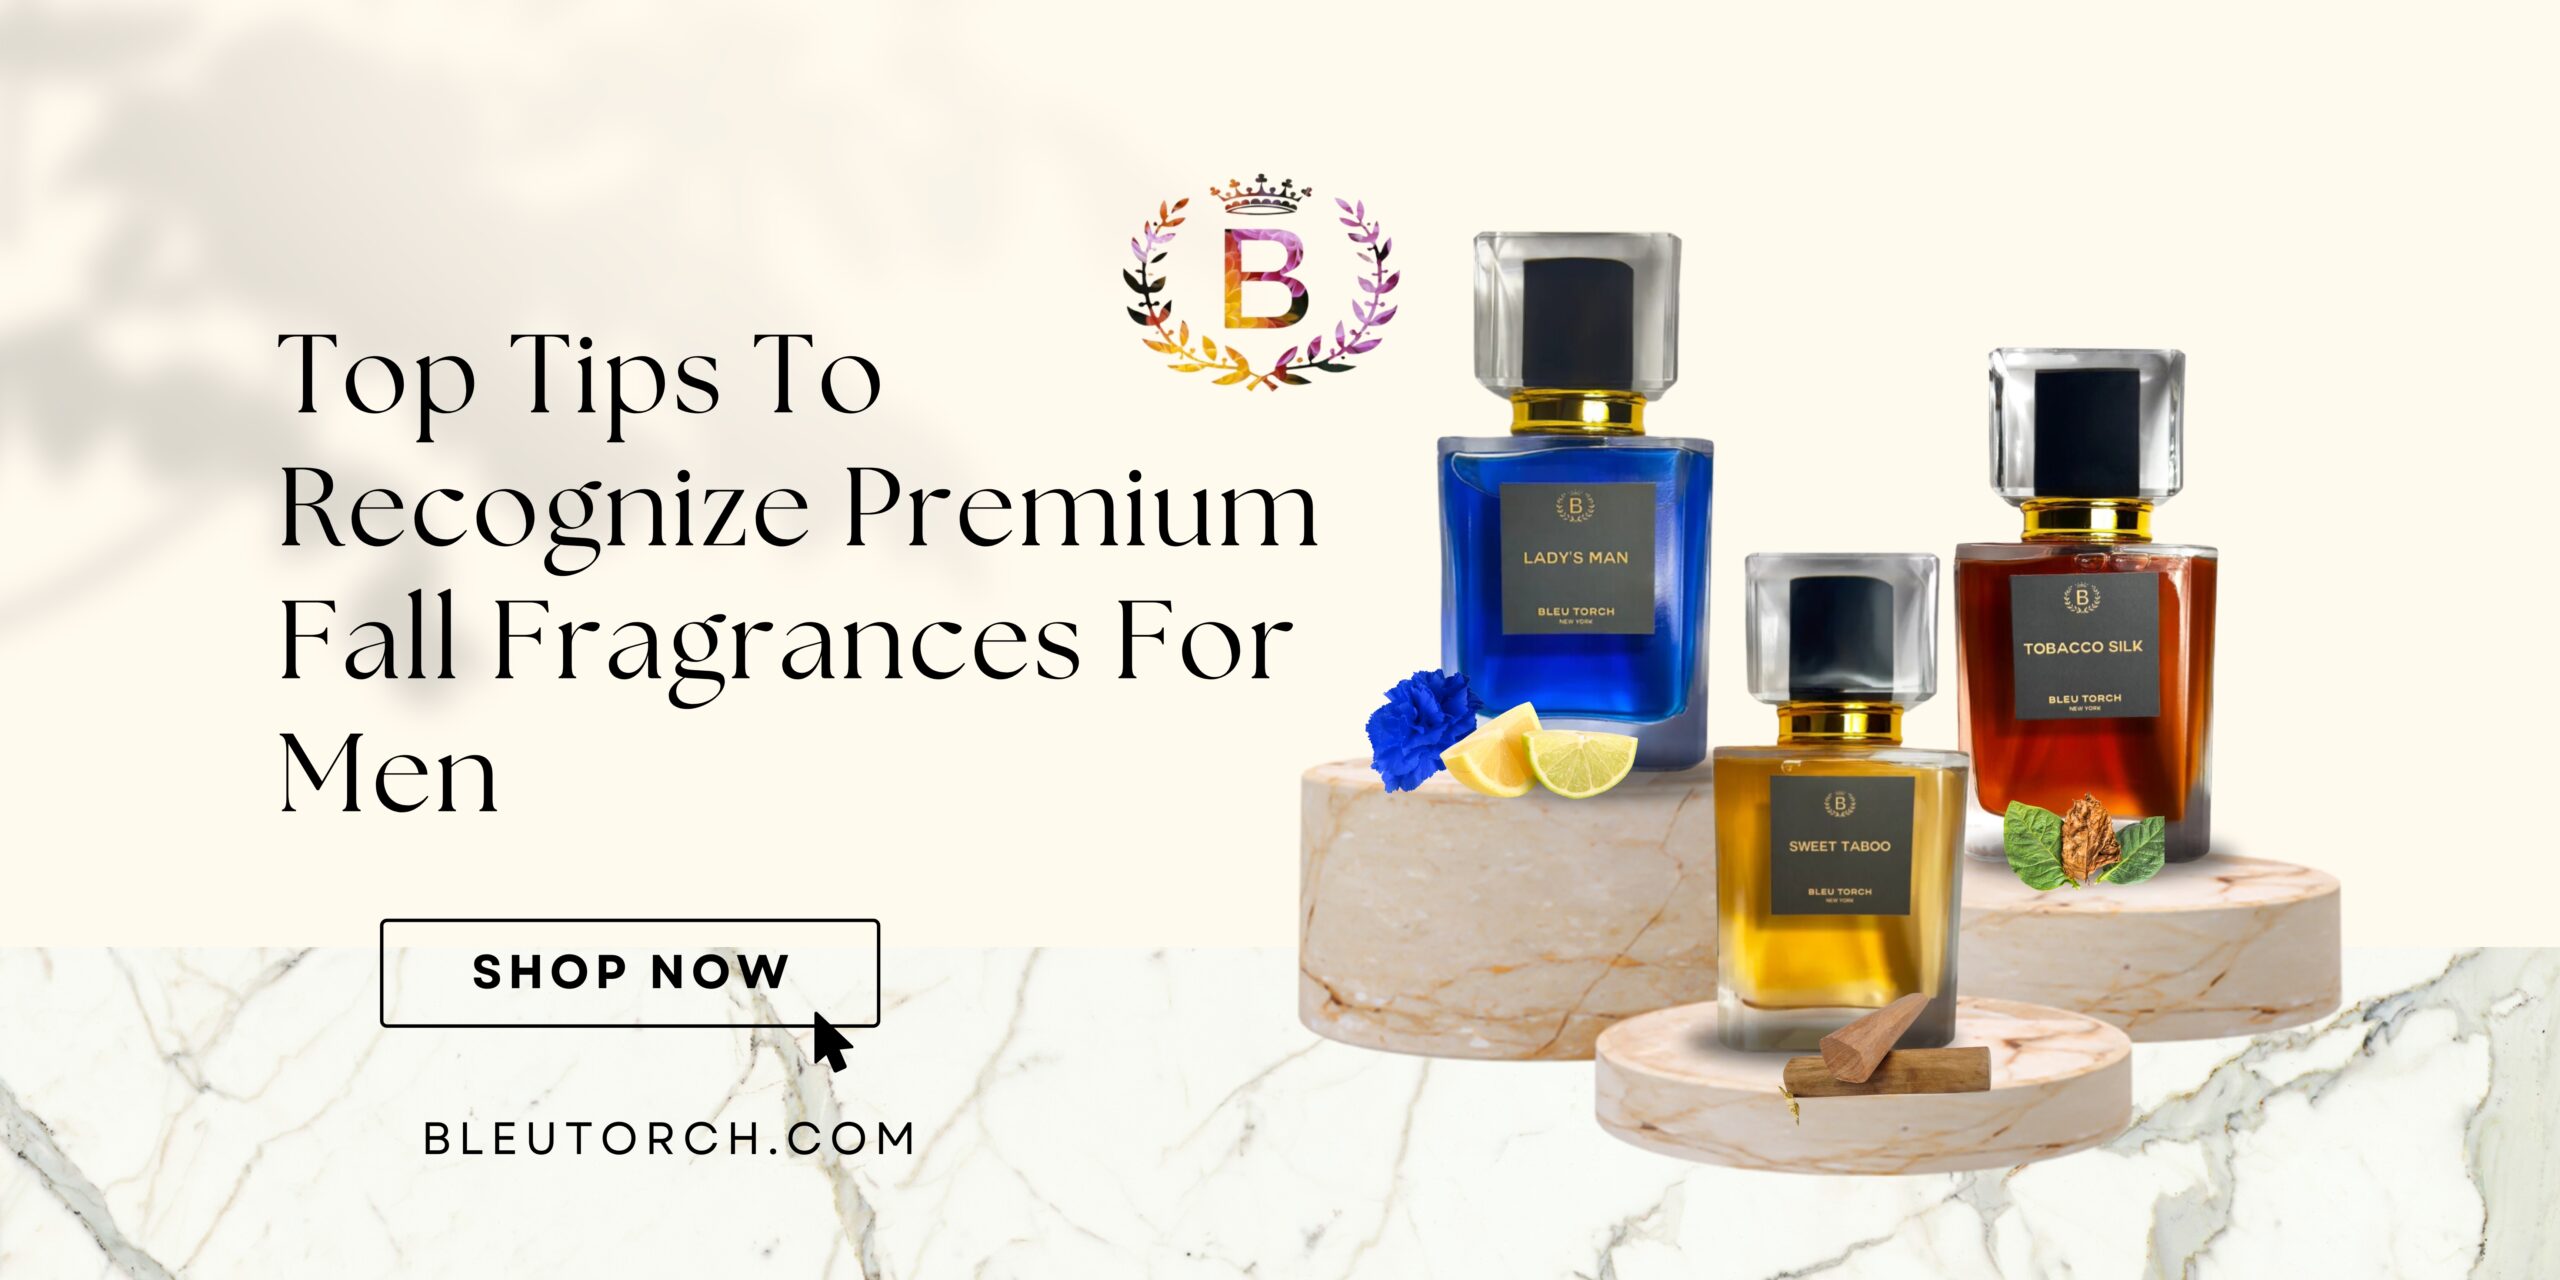 Top Tips To Recognize Premium Fall Fragrances For Men